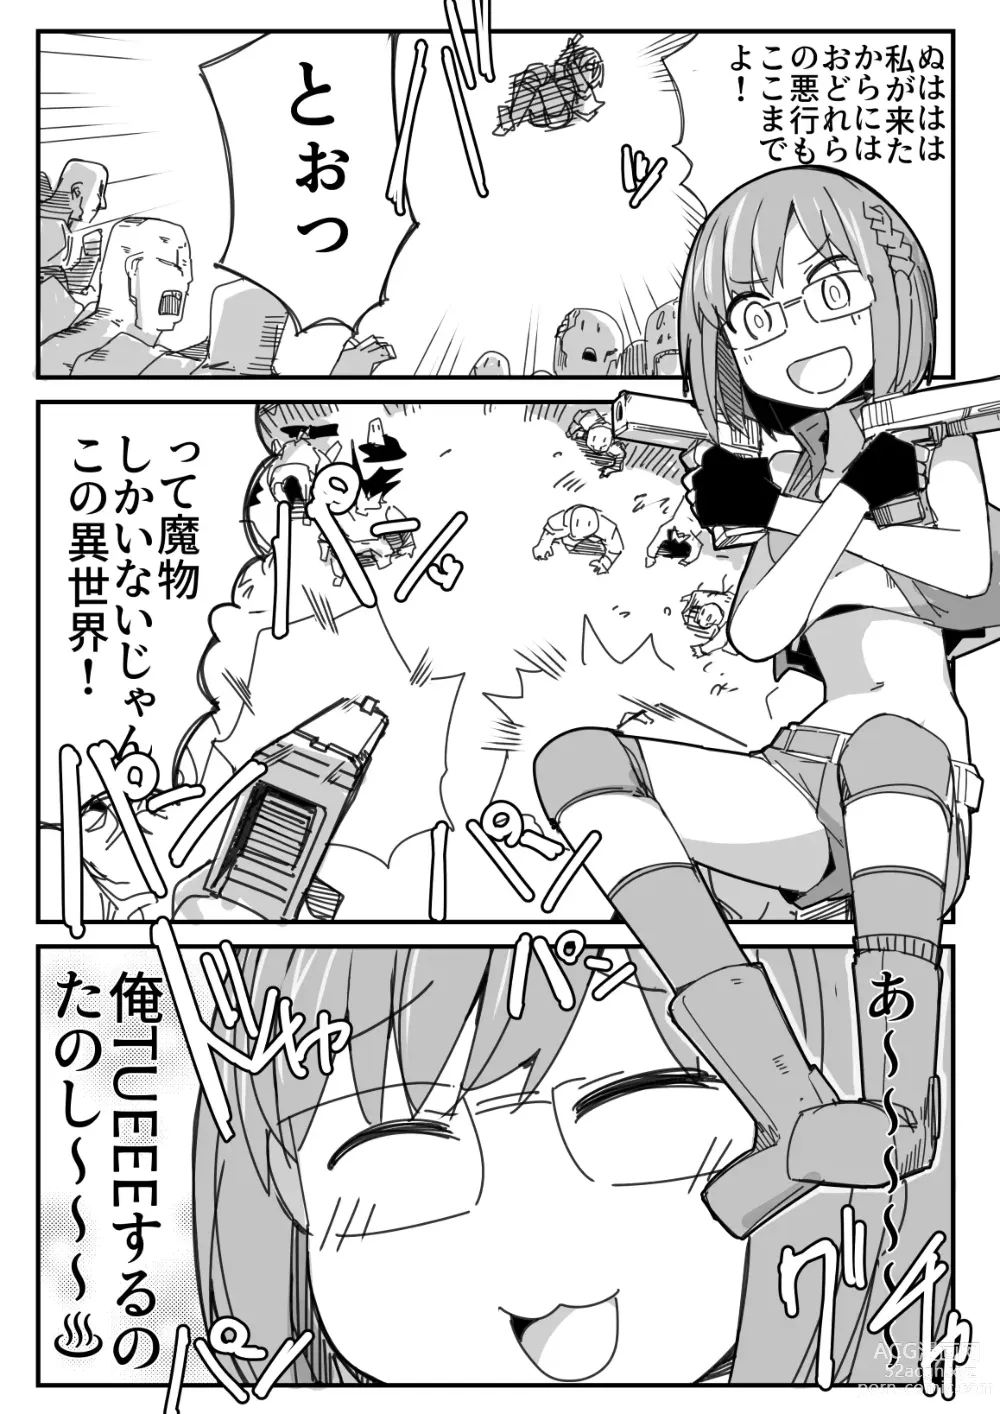 Page 2 of doujinshi Ryona no Kane 2021